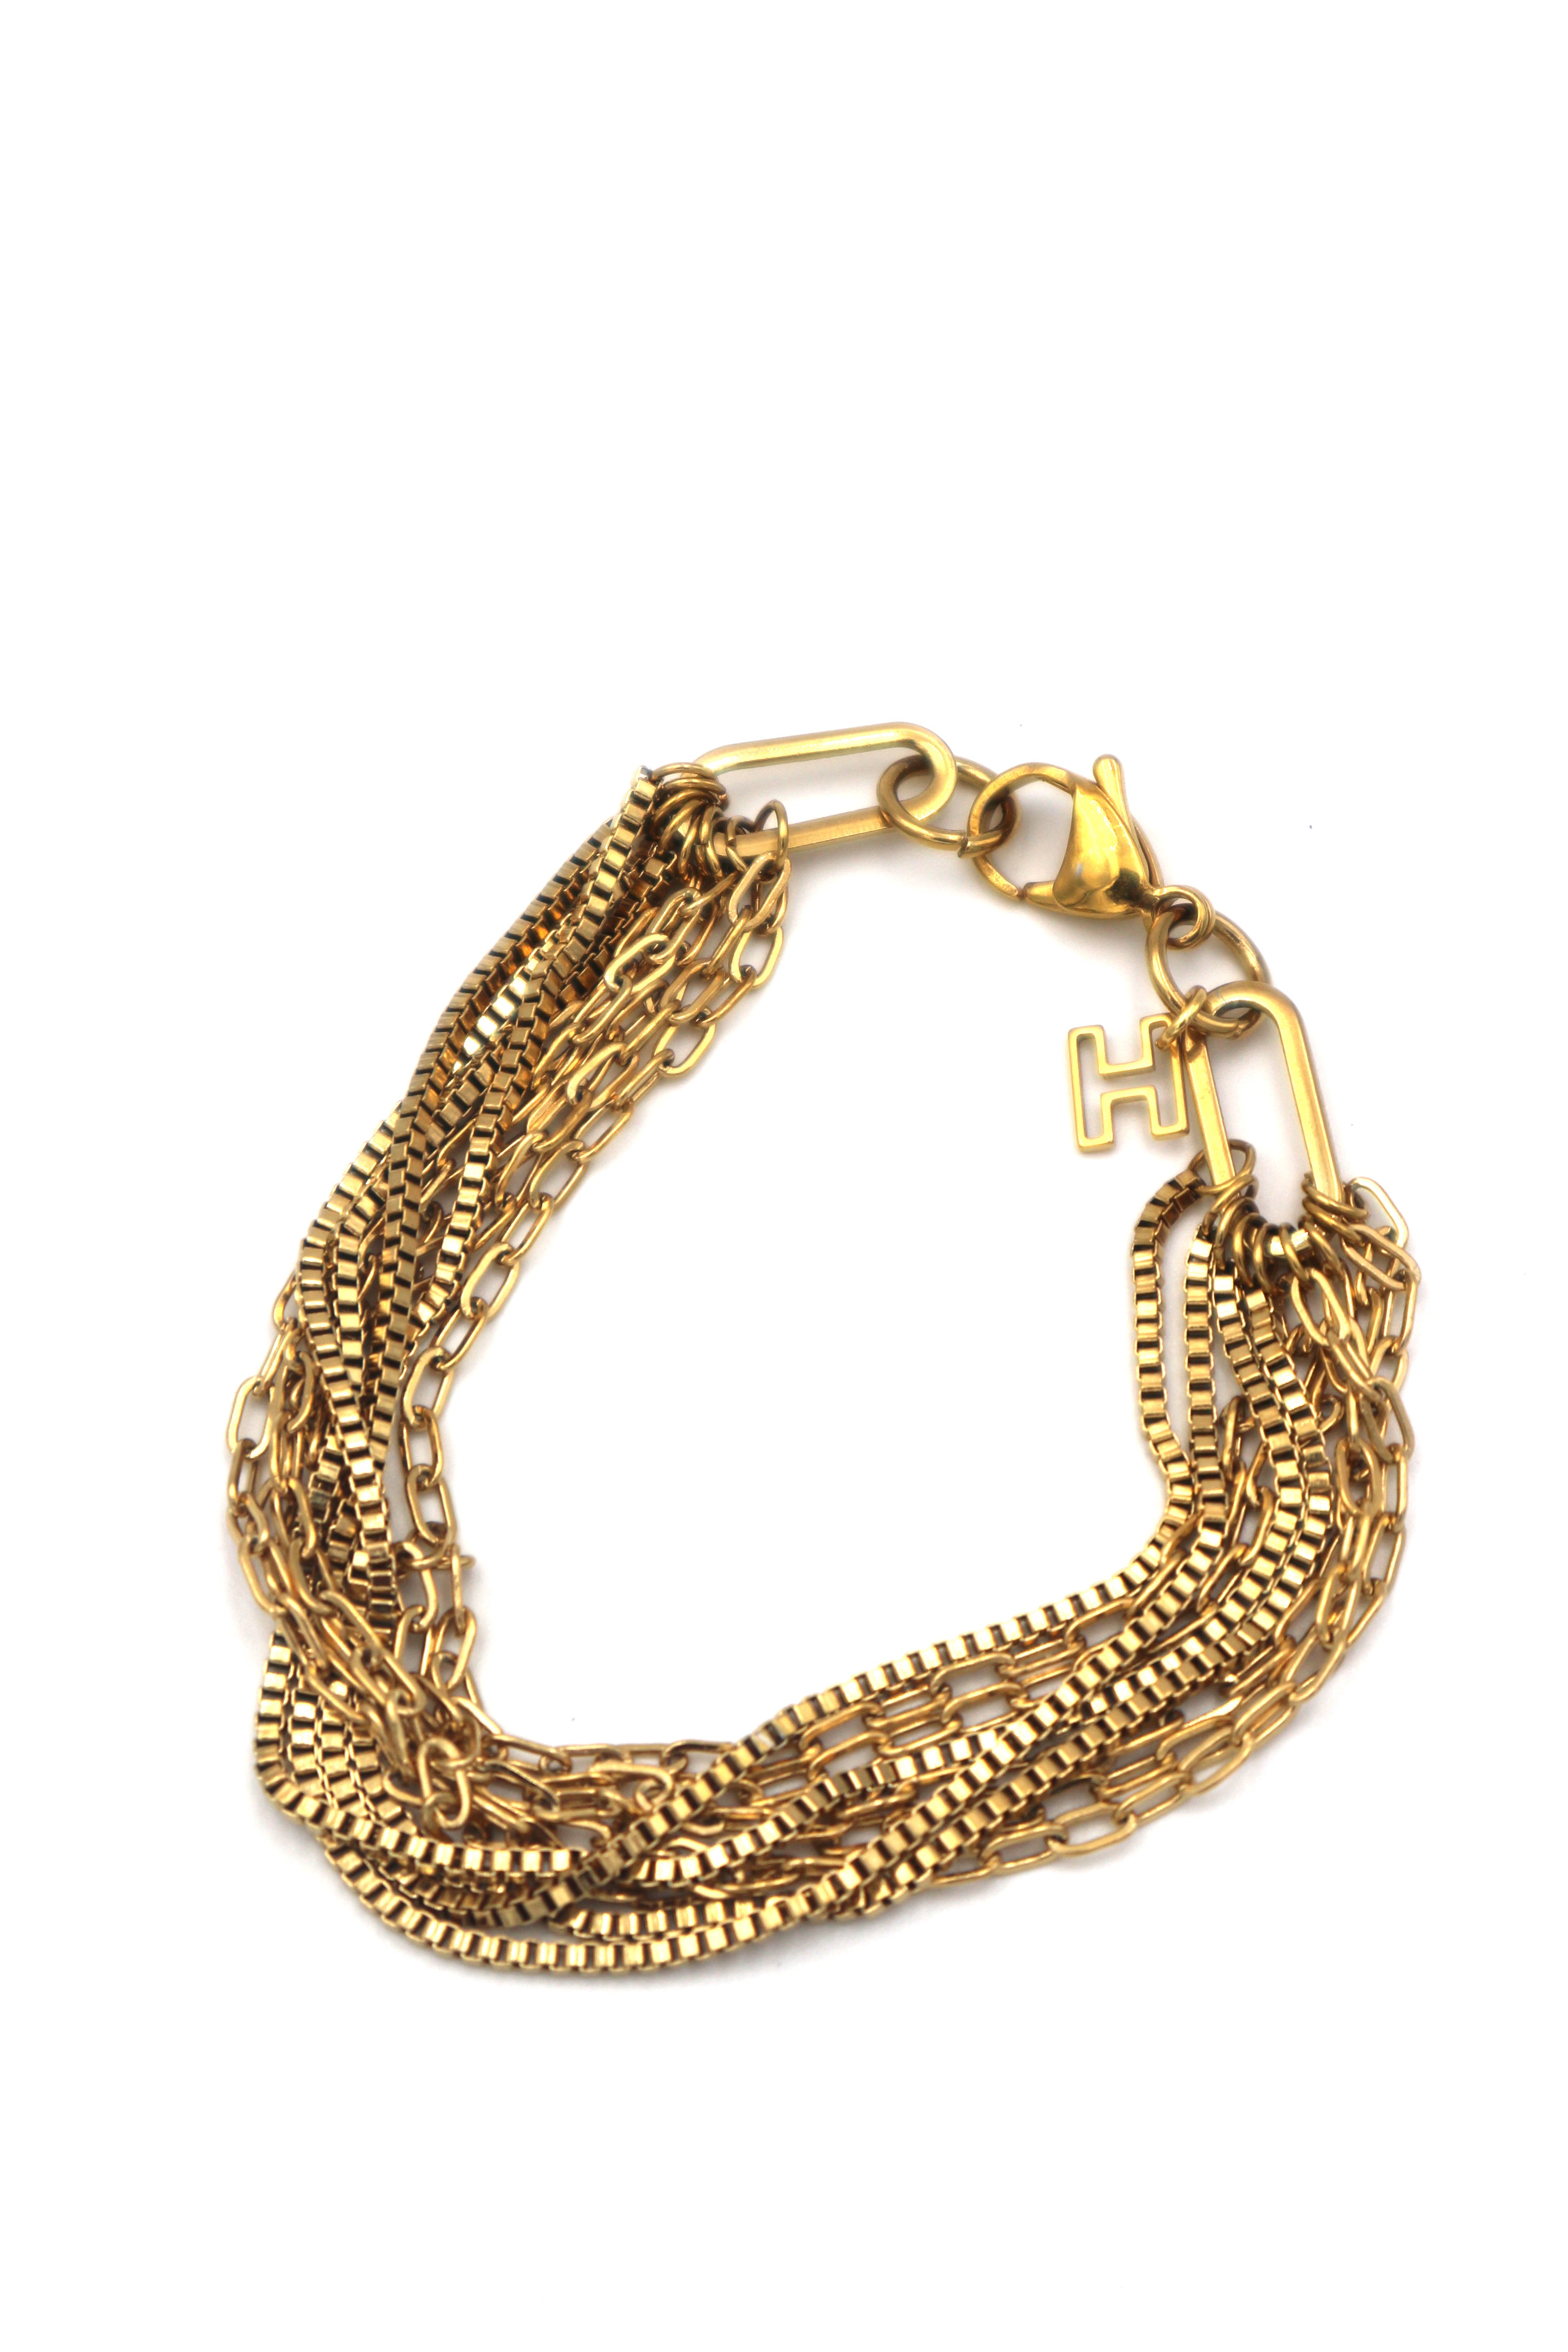 KIMY // The multi-chain bracelet